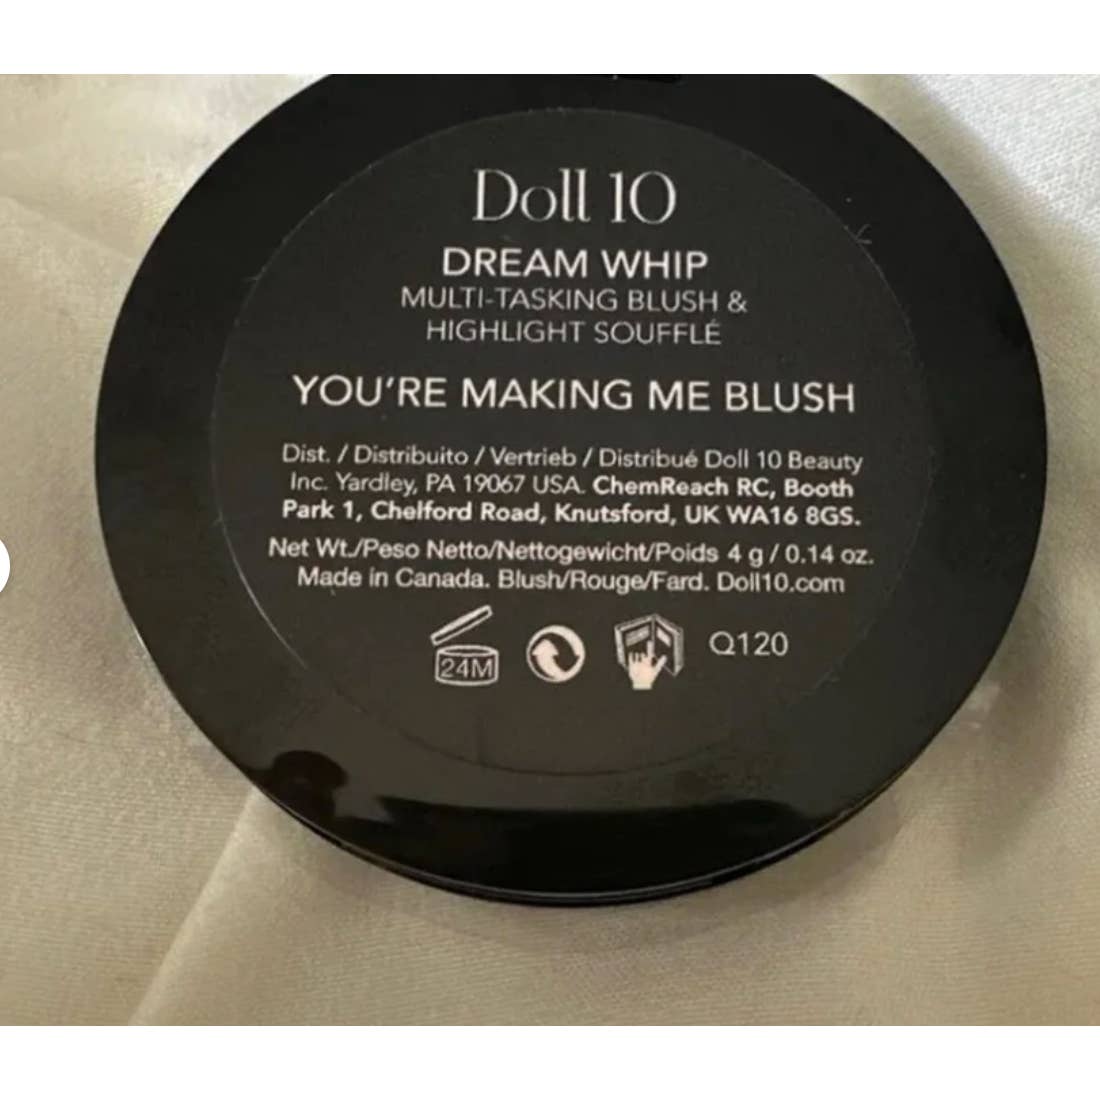 DOLL 10 Blush dream whip multi-tasking blush & highlight souffle